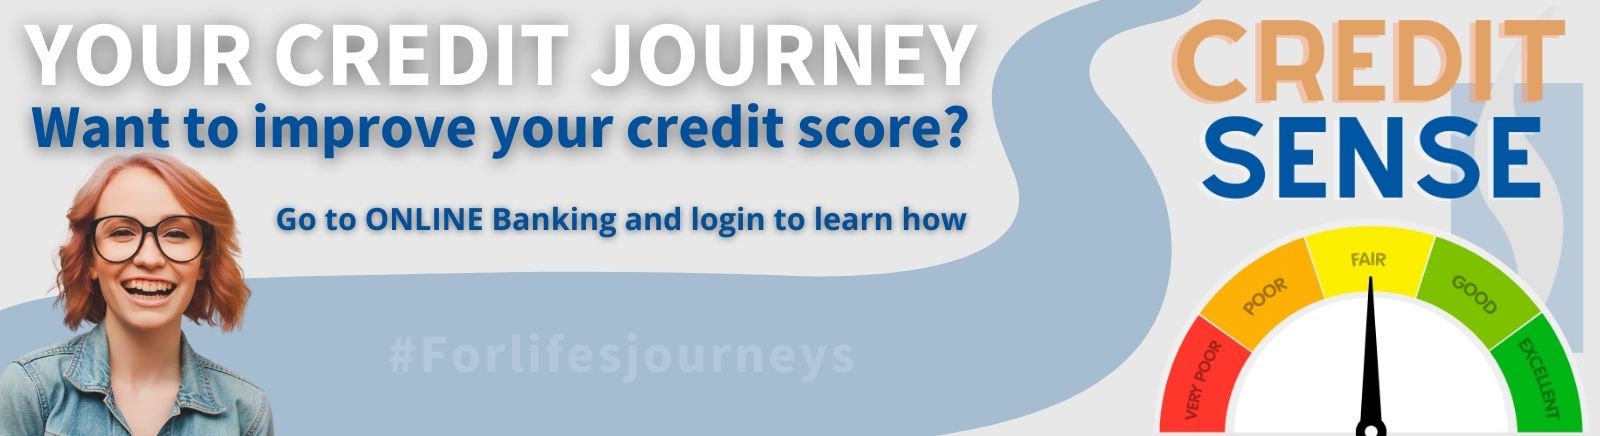 credit sense online banking seneca savings improve your credit score